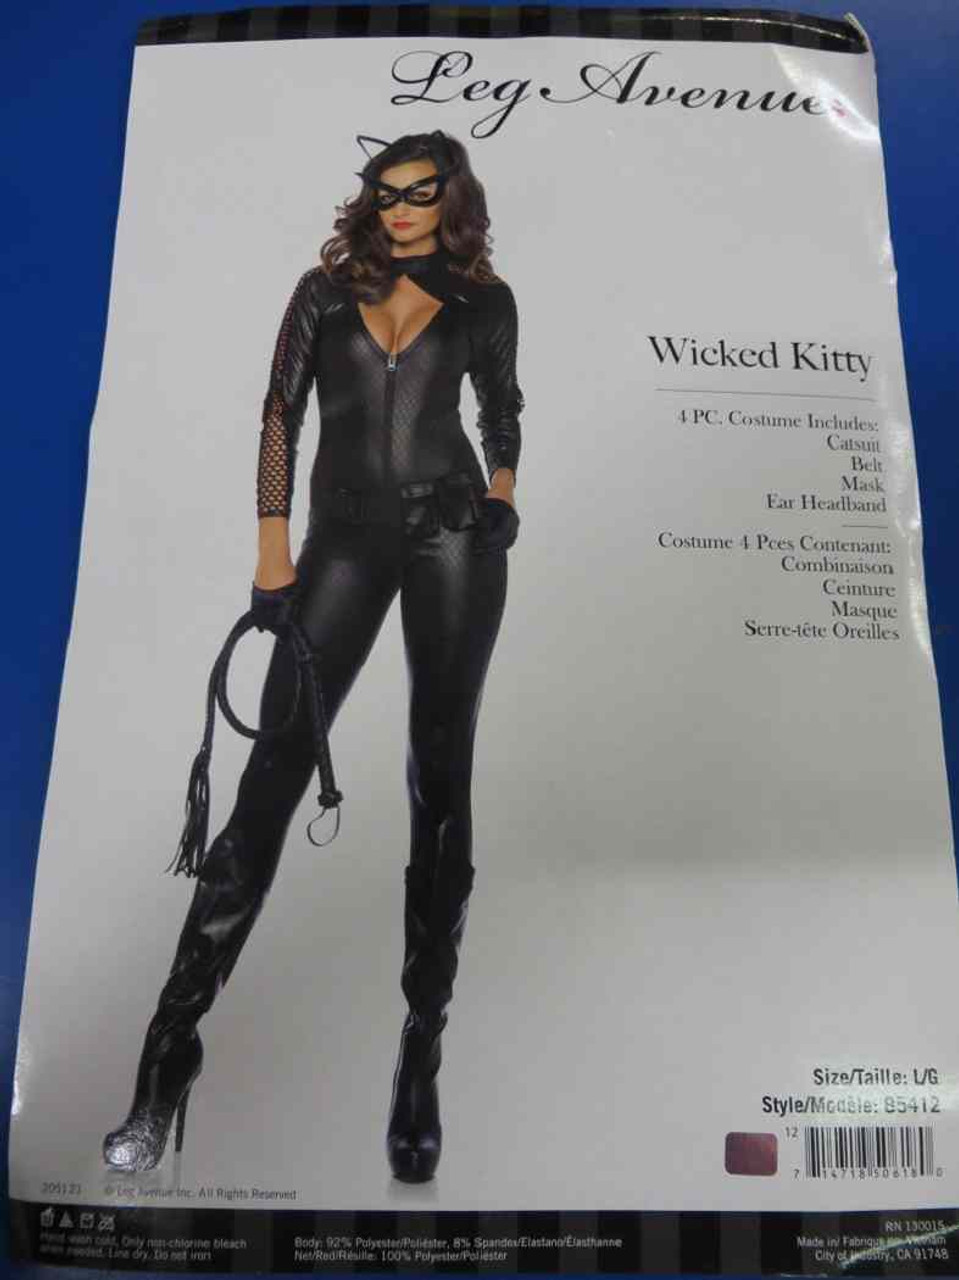 Catwoman Costume Adult Halloween Fancy Dress